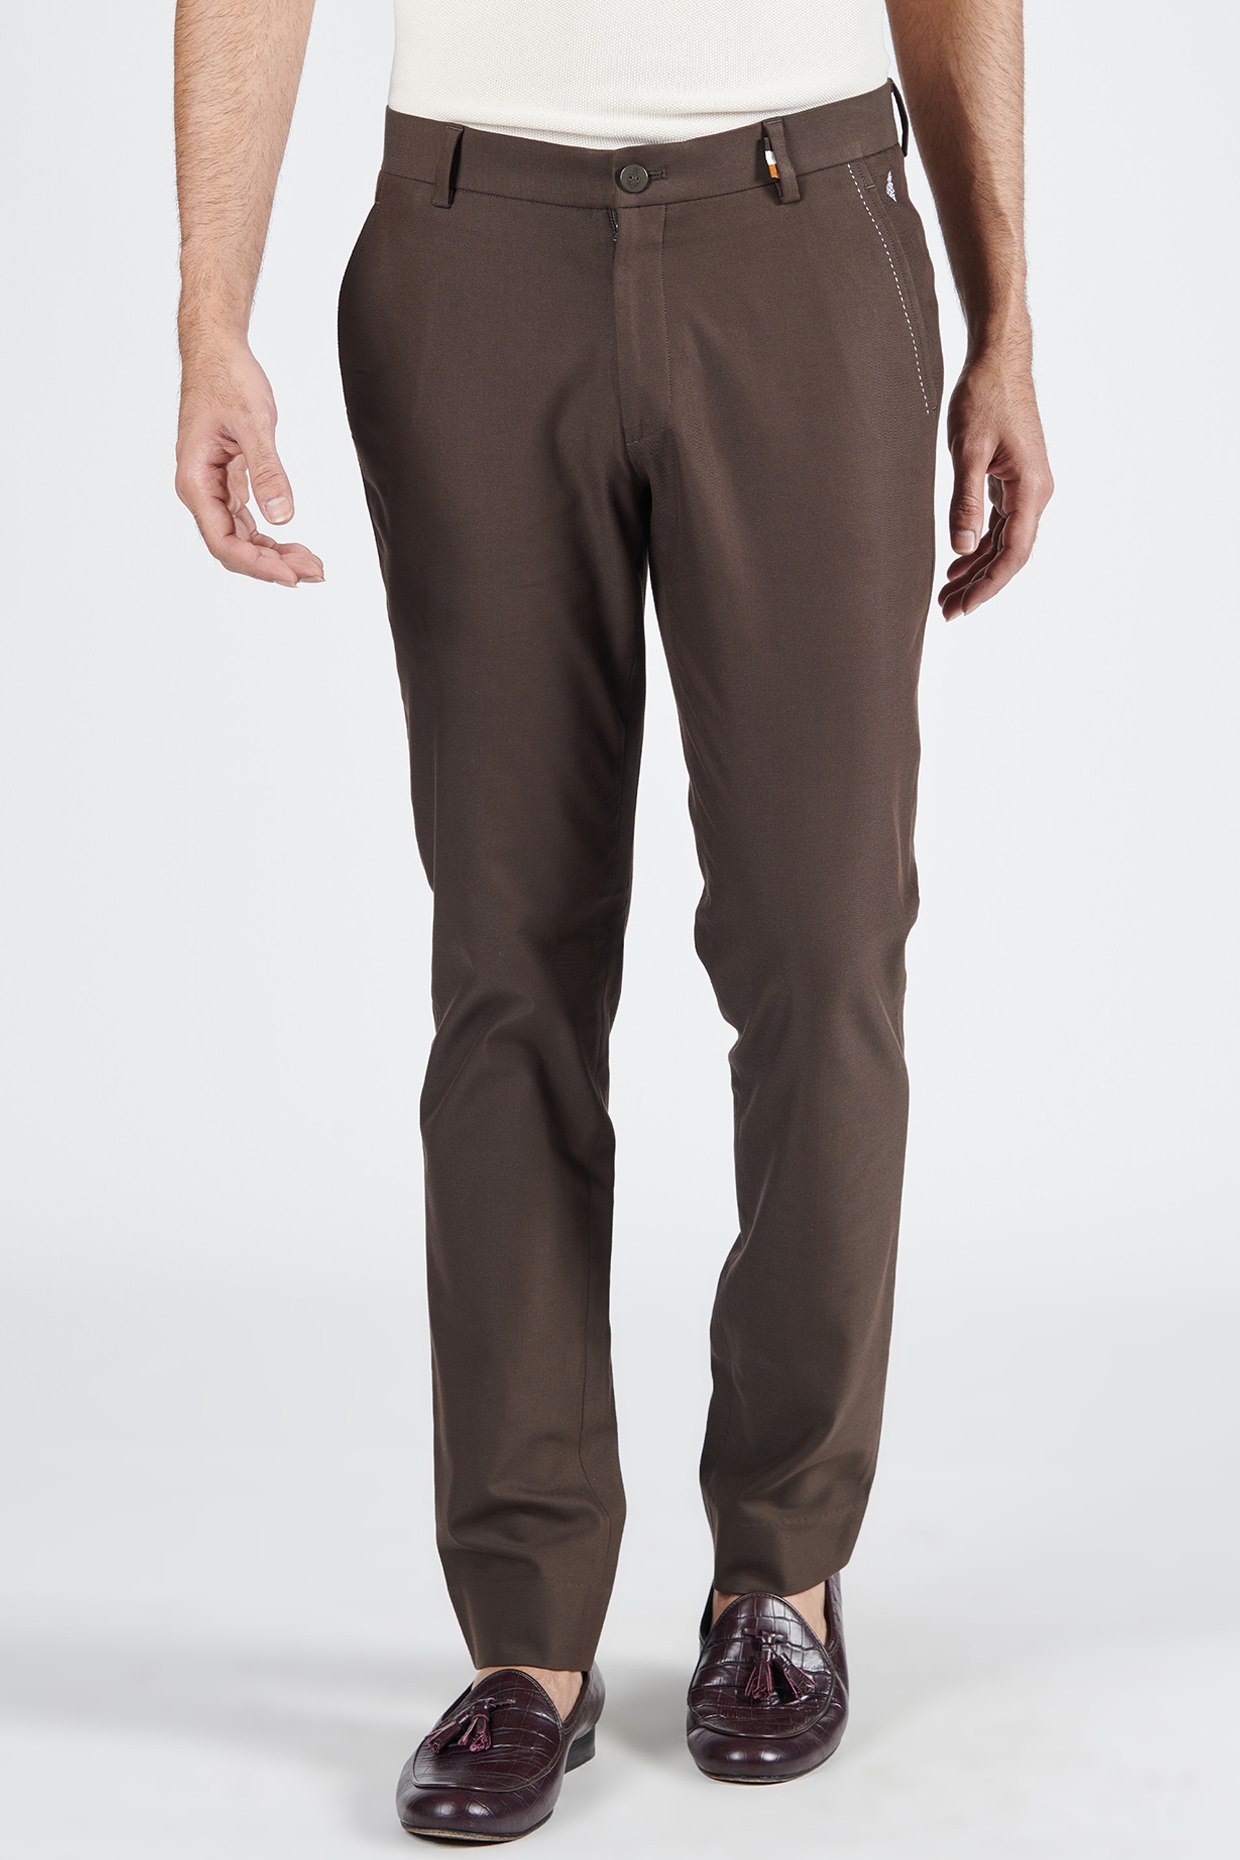 Formal Trousers (Pack Of 3 - Brown , Dark Brown , Dark Green) | Only on  trendyfashionbeat.wooplr.com | Best Trousers Online | Formal trousers for  men, Fitted trousers, Trousers